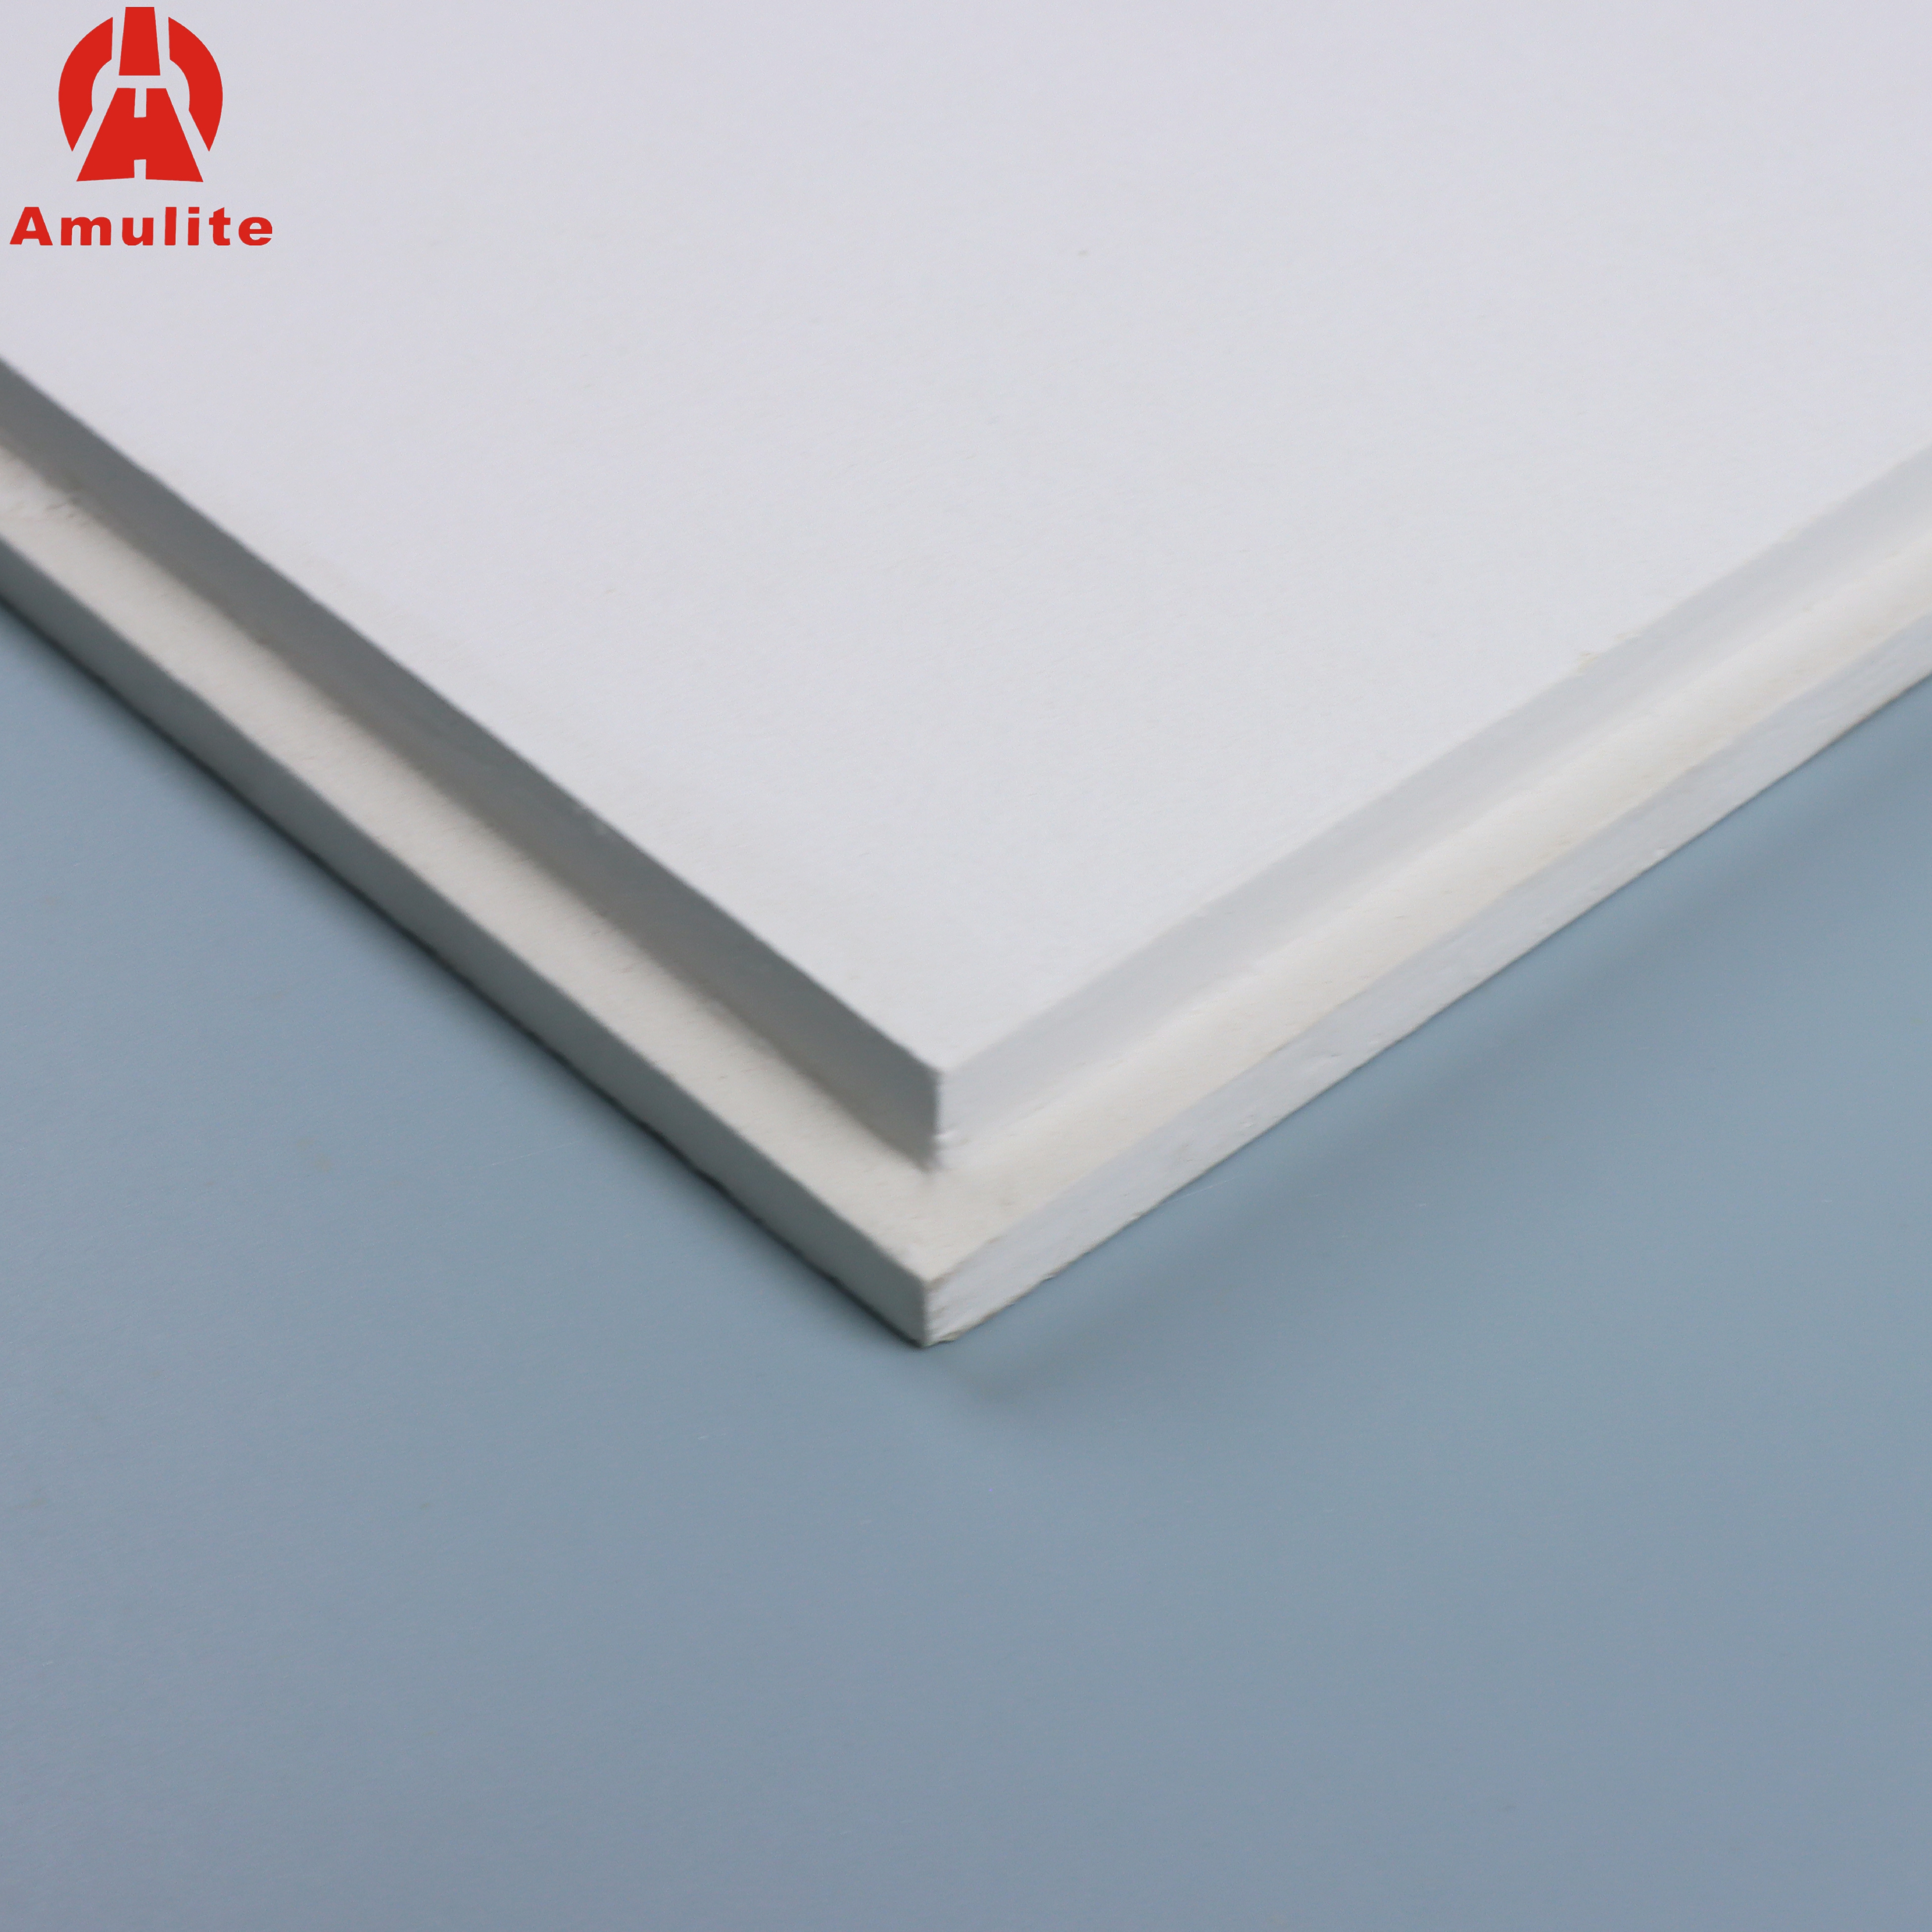 Acoustic Panels Fireproof Different Colors Decoration Fiberglass Acoustical Ceiling Board